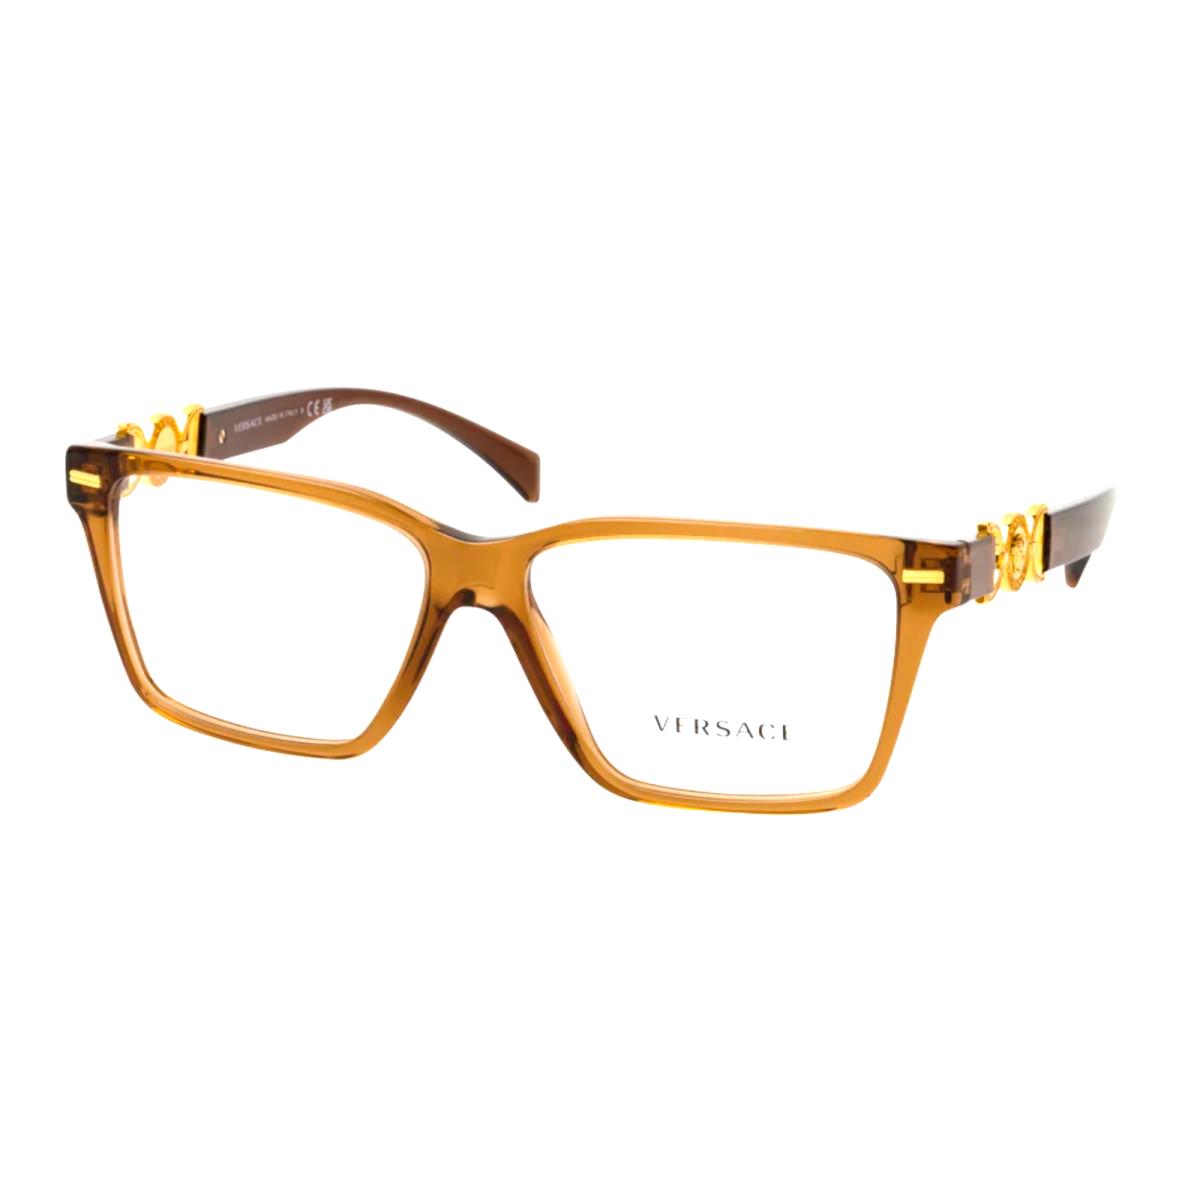 Versace Eyeglasses Mod. 3335 5028 54-14 140 Brown Gold Frames Medusa Logos - Frame: Brown, Lens: